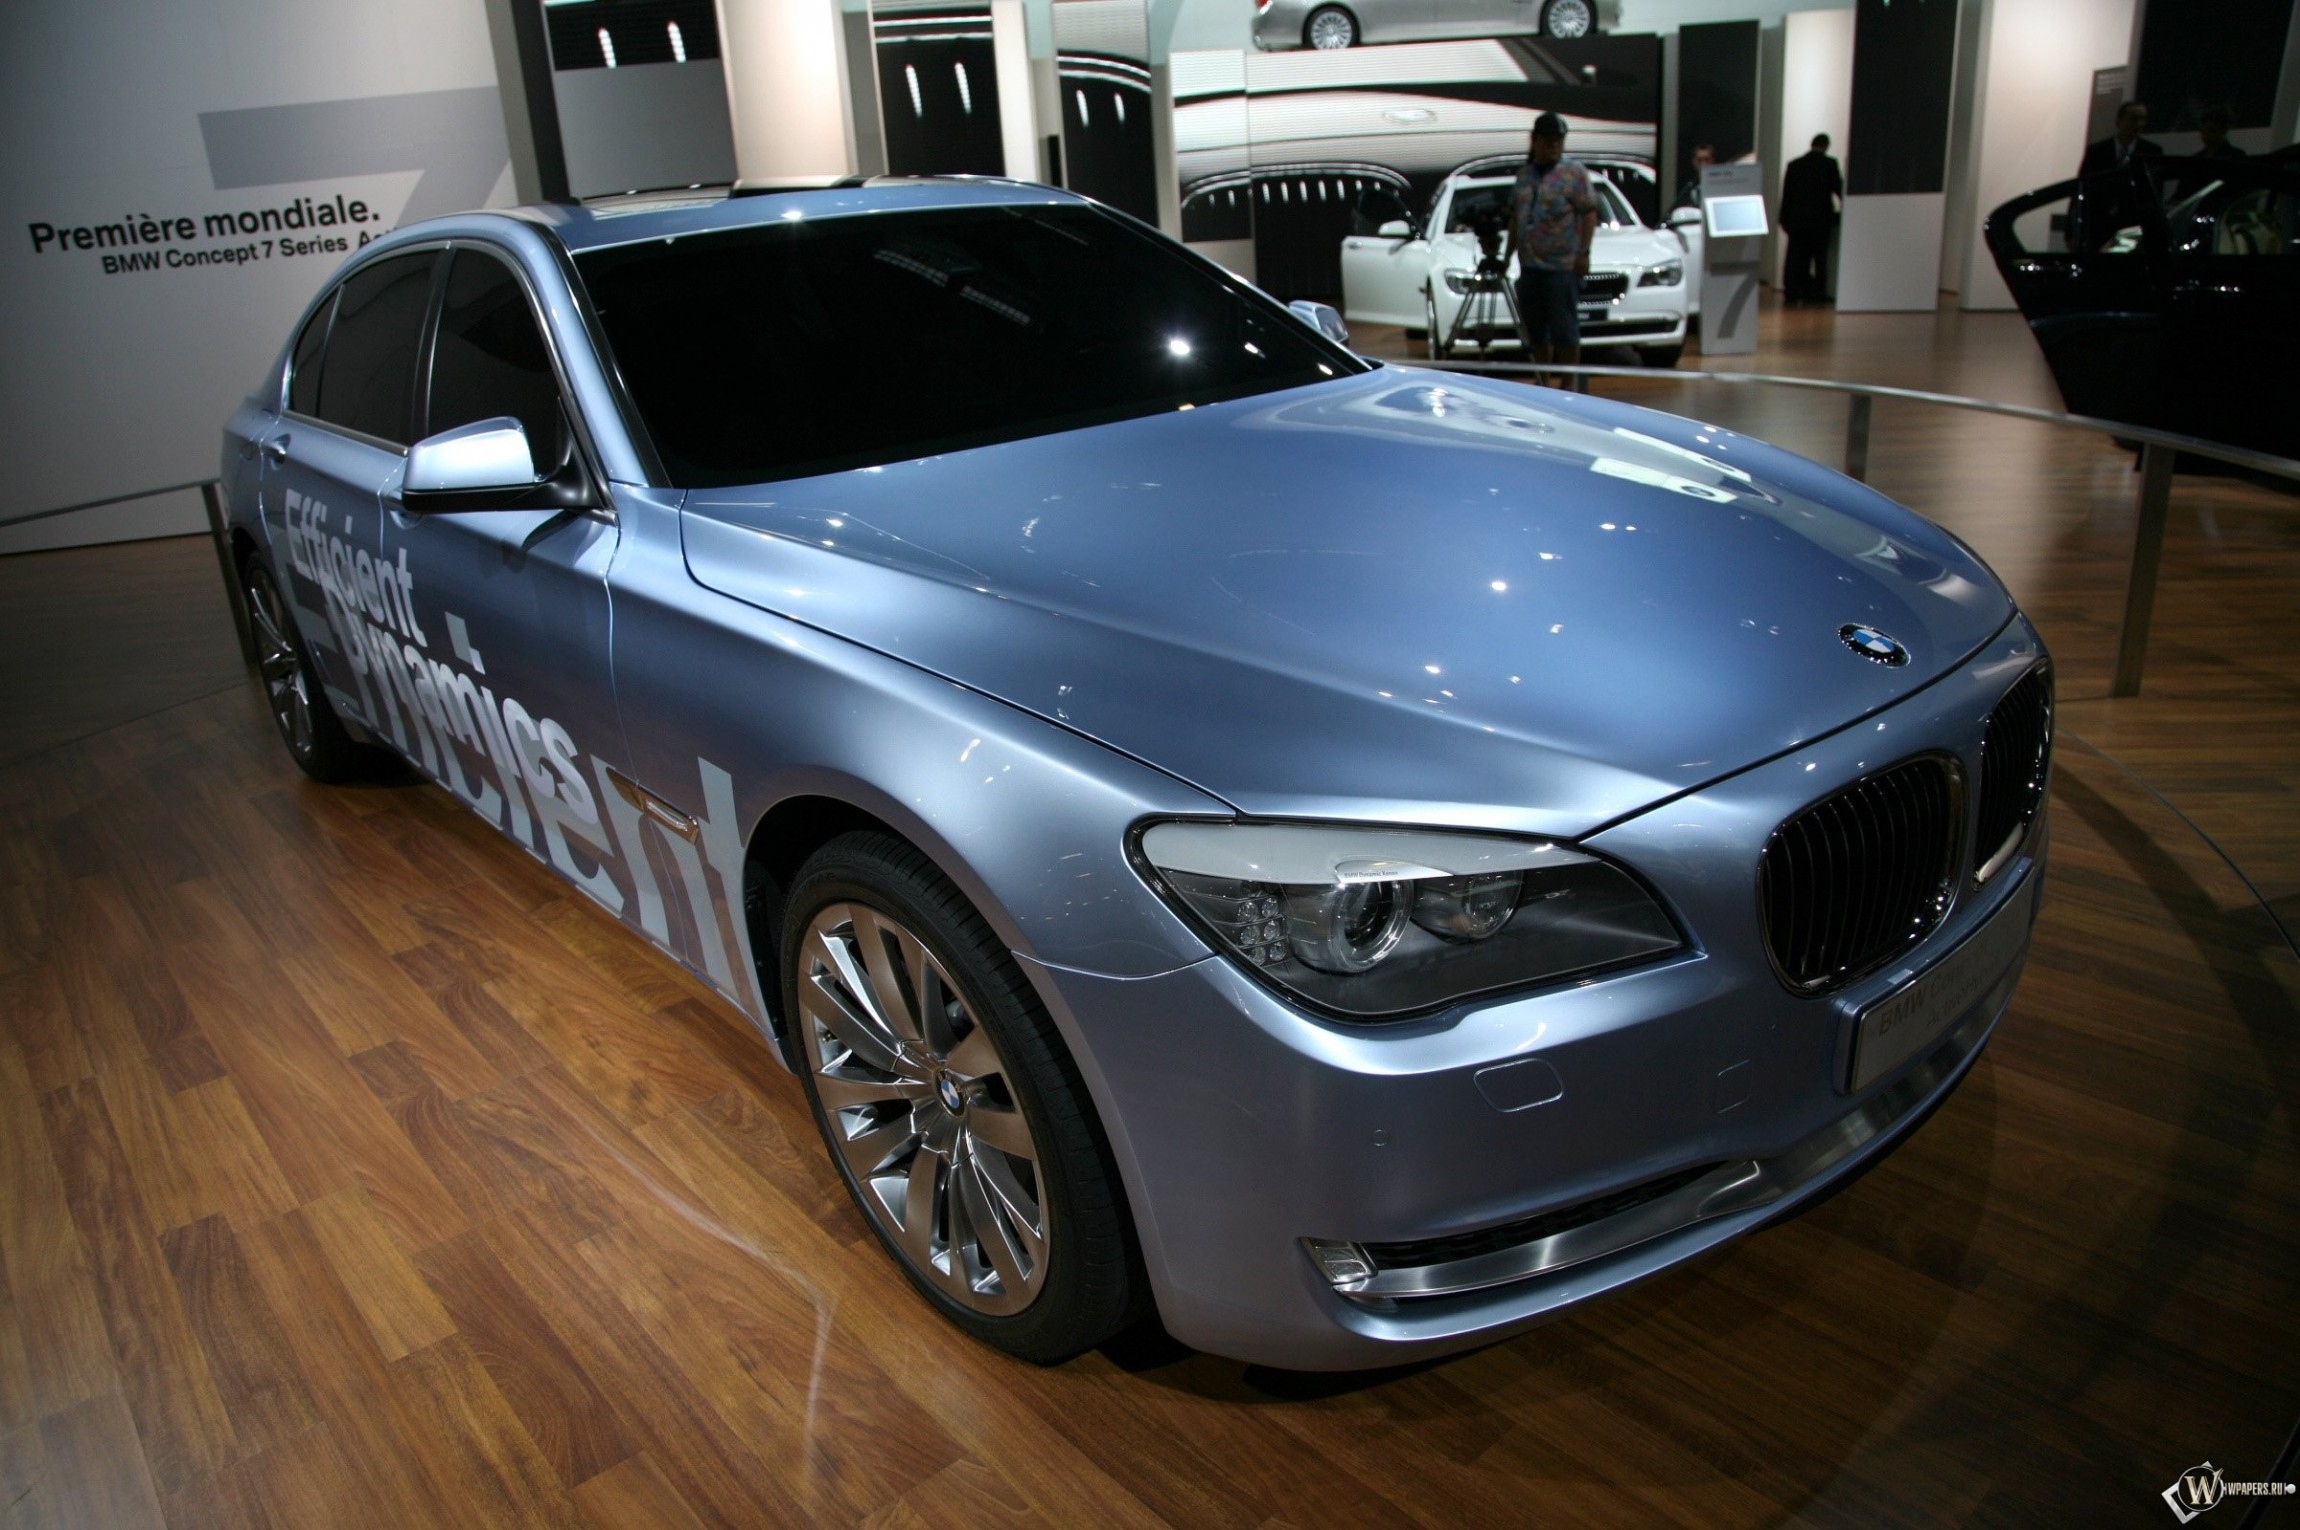 BMW - 7 Series Active Hybrid (2008) 2300x1530